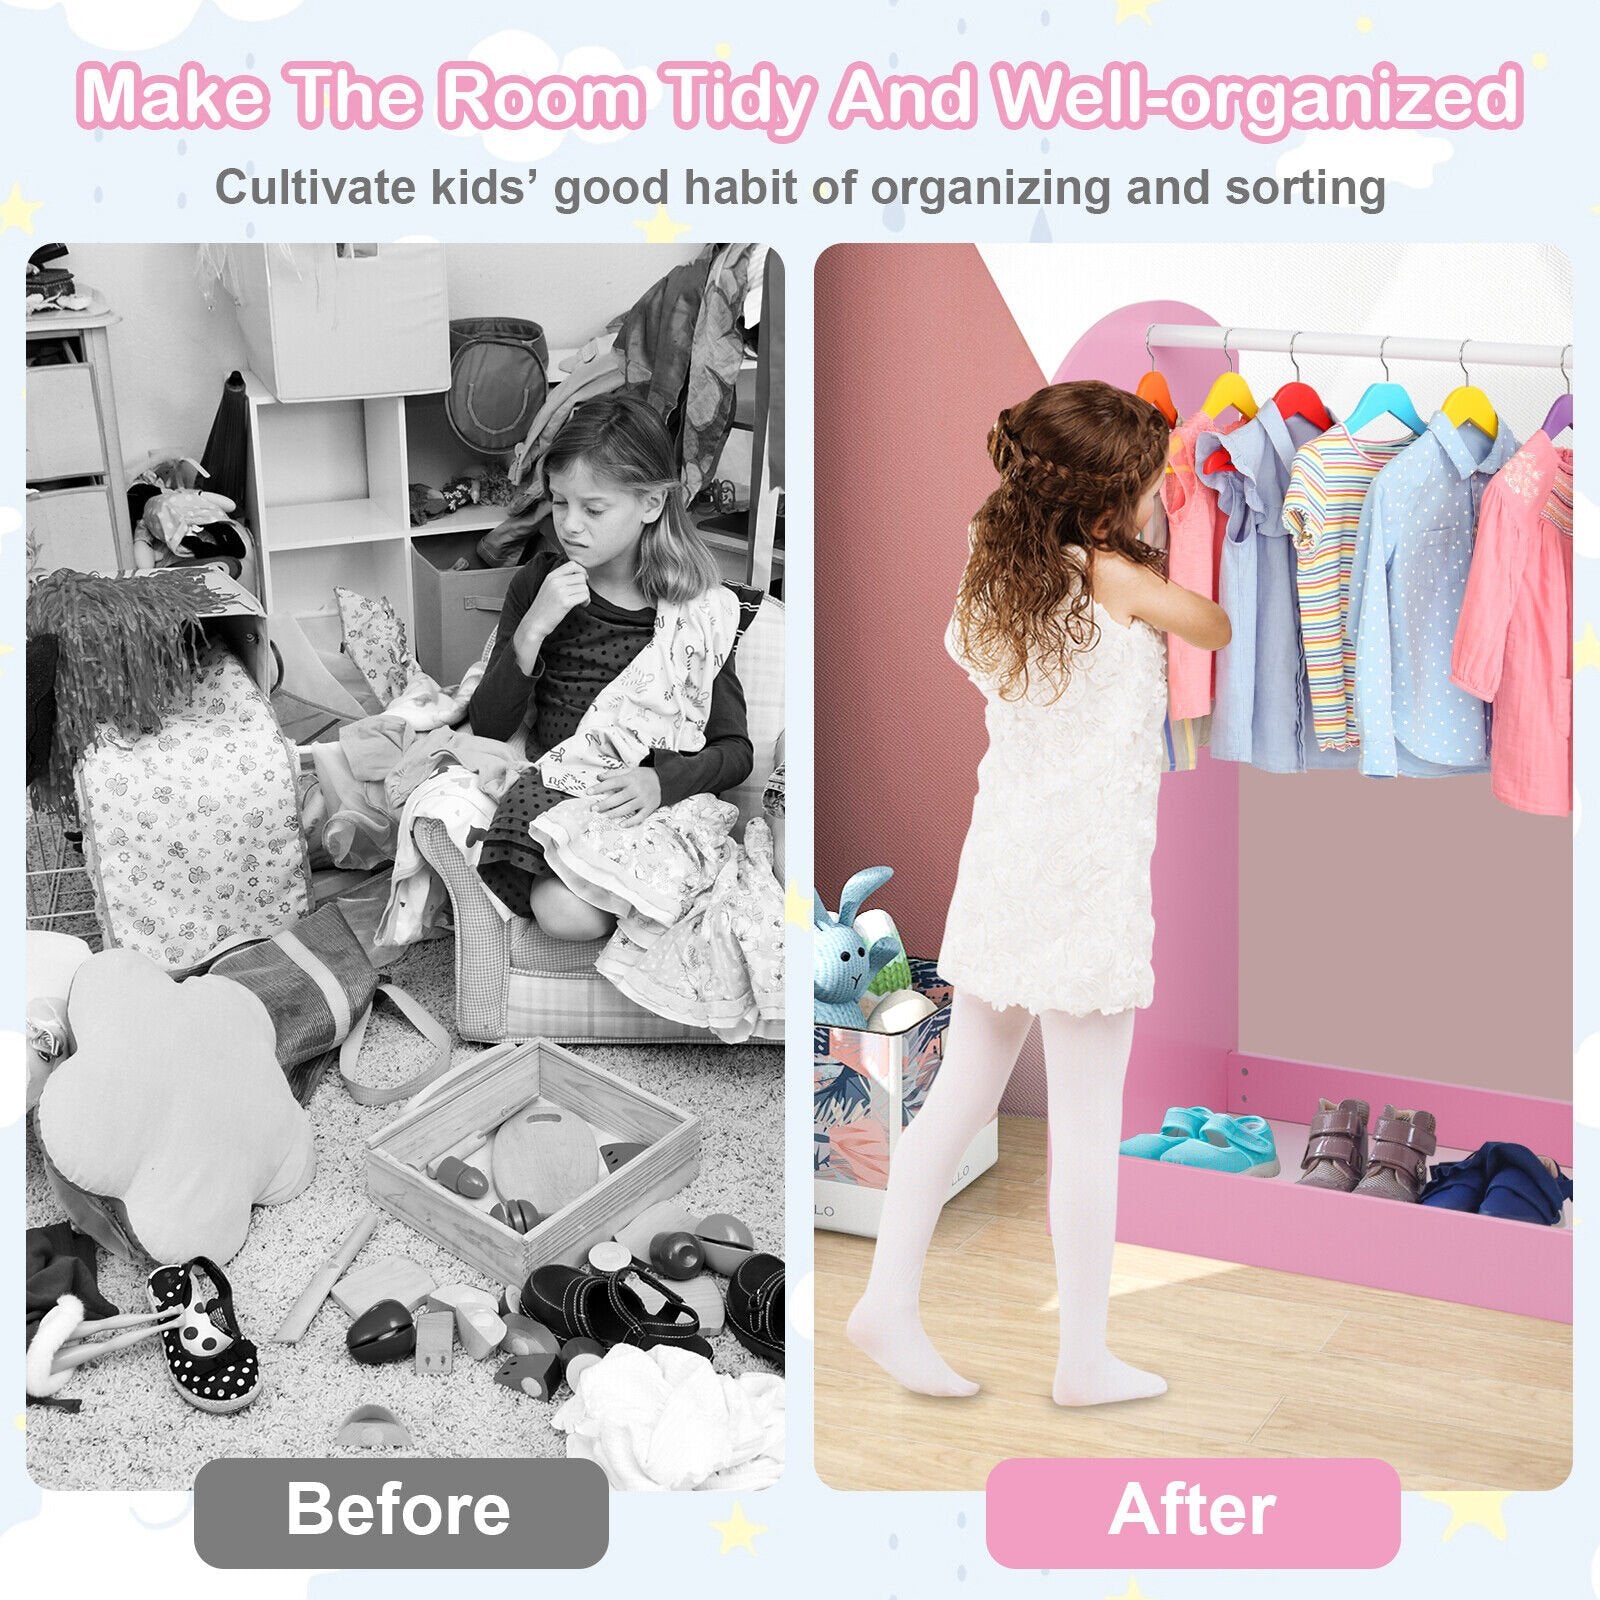 Kids Dress Up Storage with Mirror, Pink - Gallery Canada